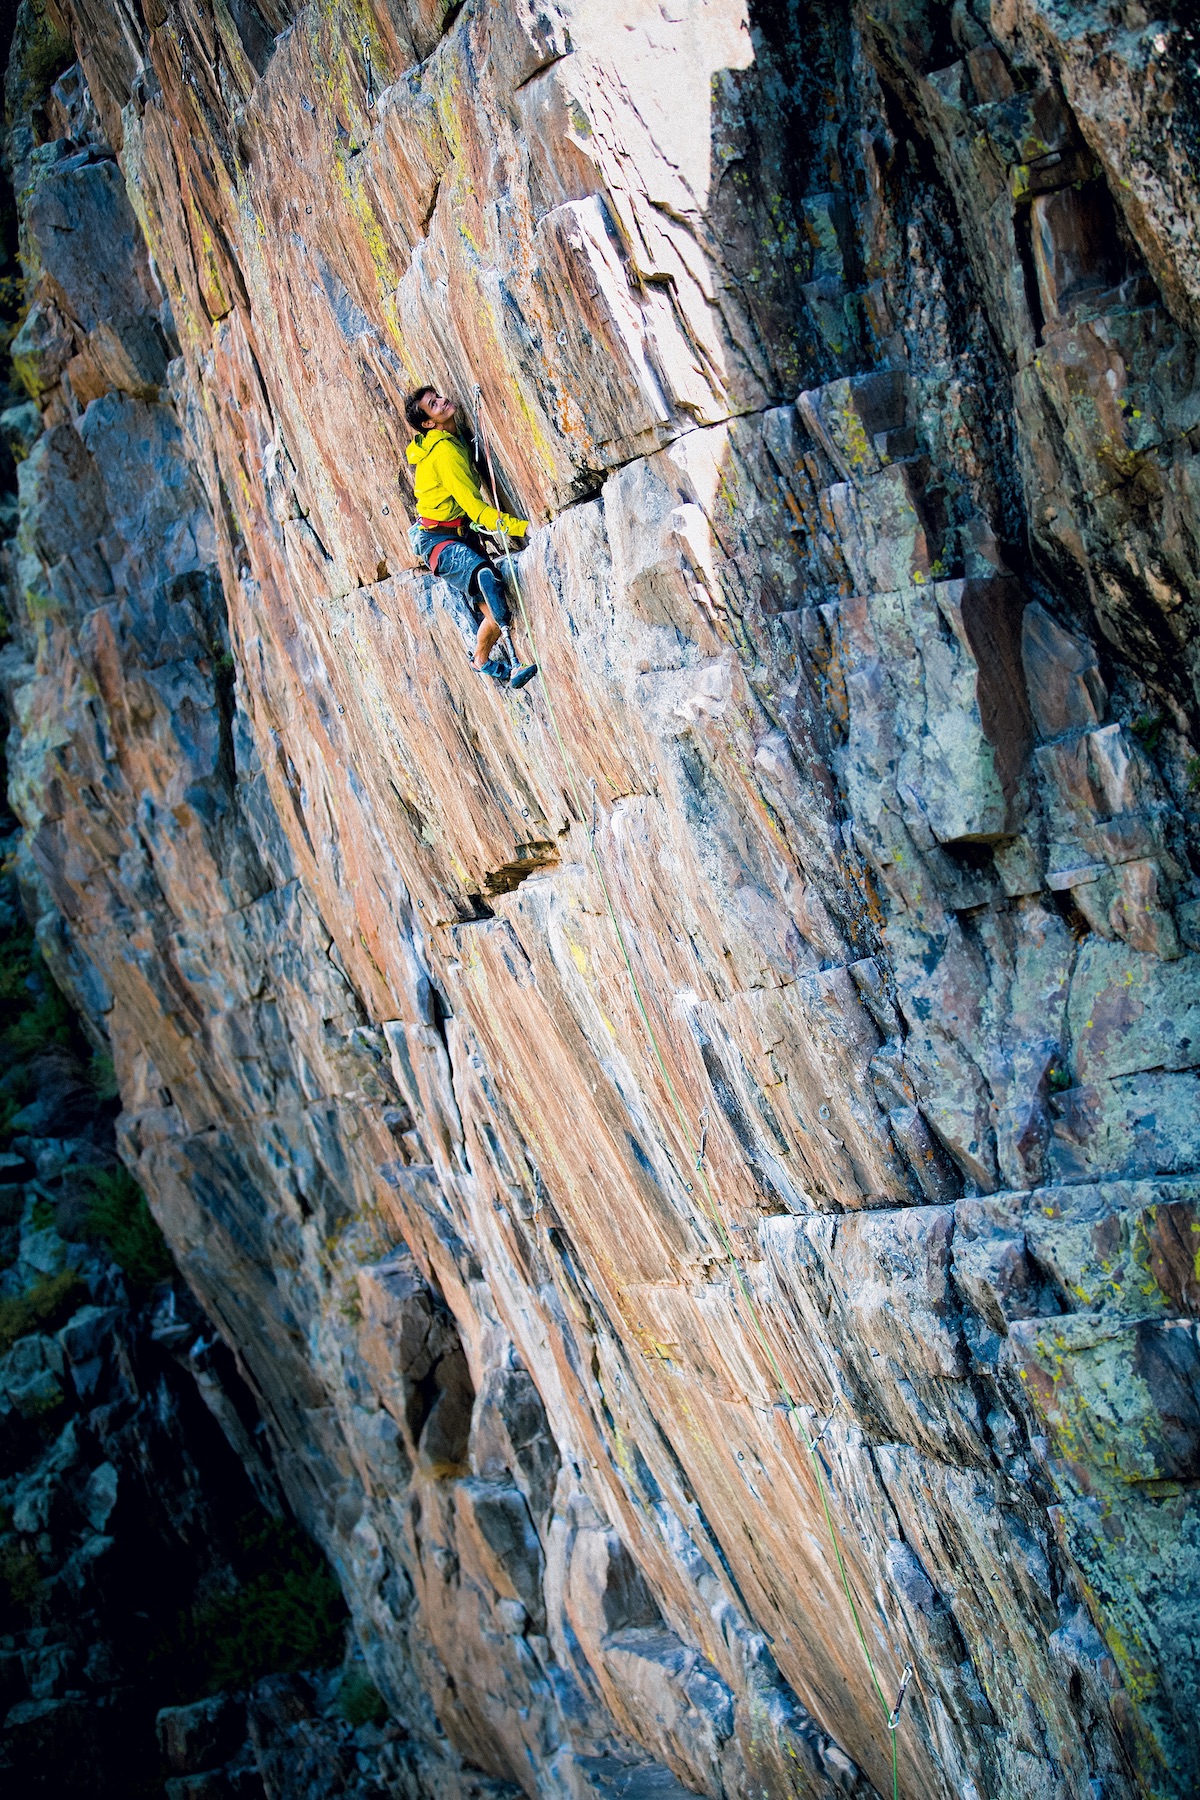 DeMartino leads Tailspin (5.12b), Poudre Canyon, Colorado. [Photo] Cameron Maier/Bearcam Media